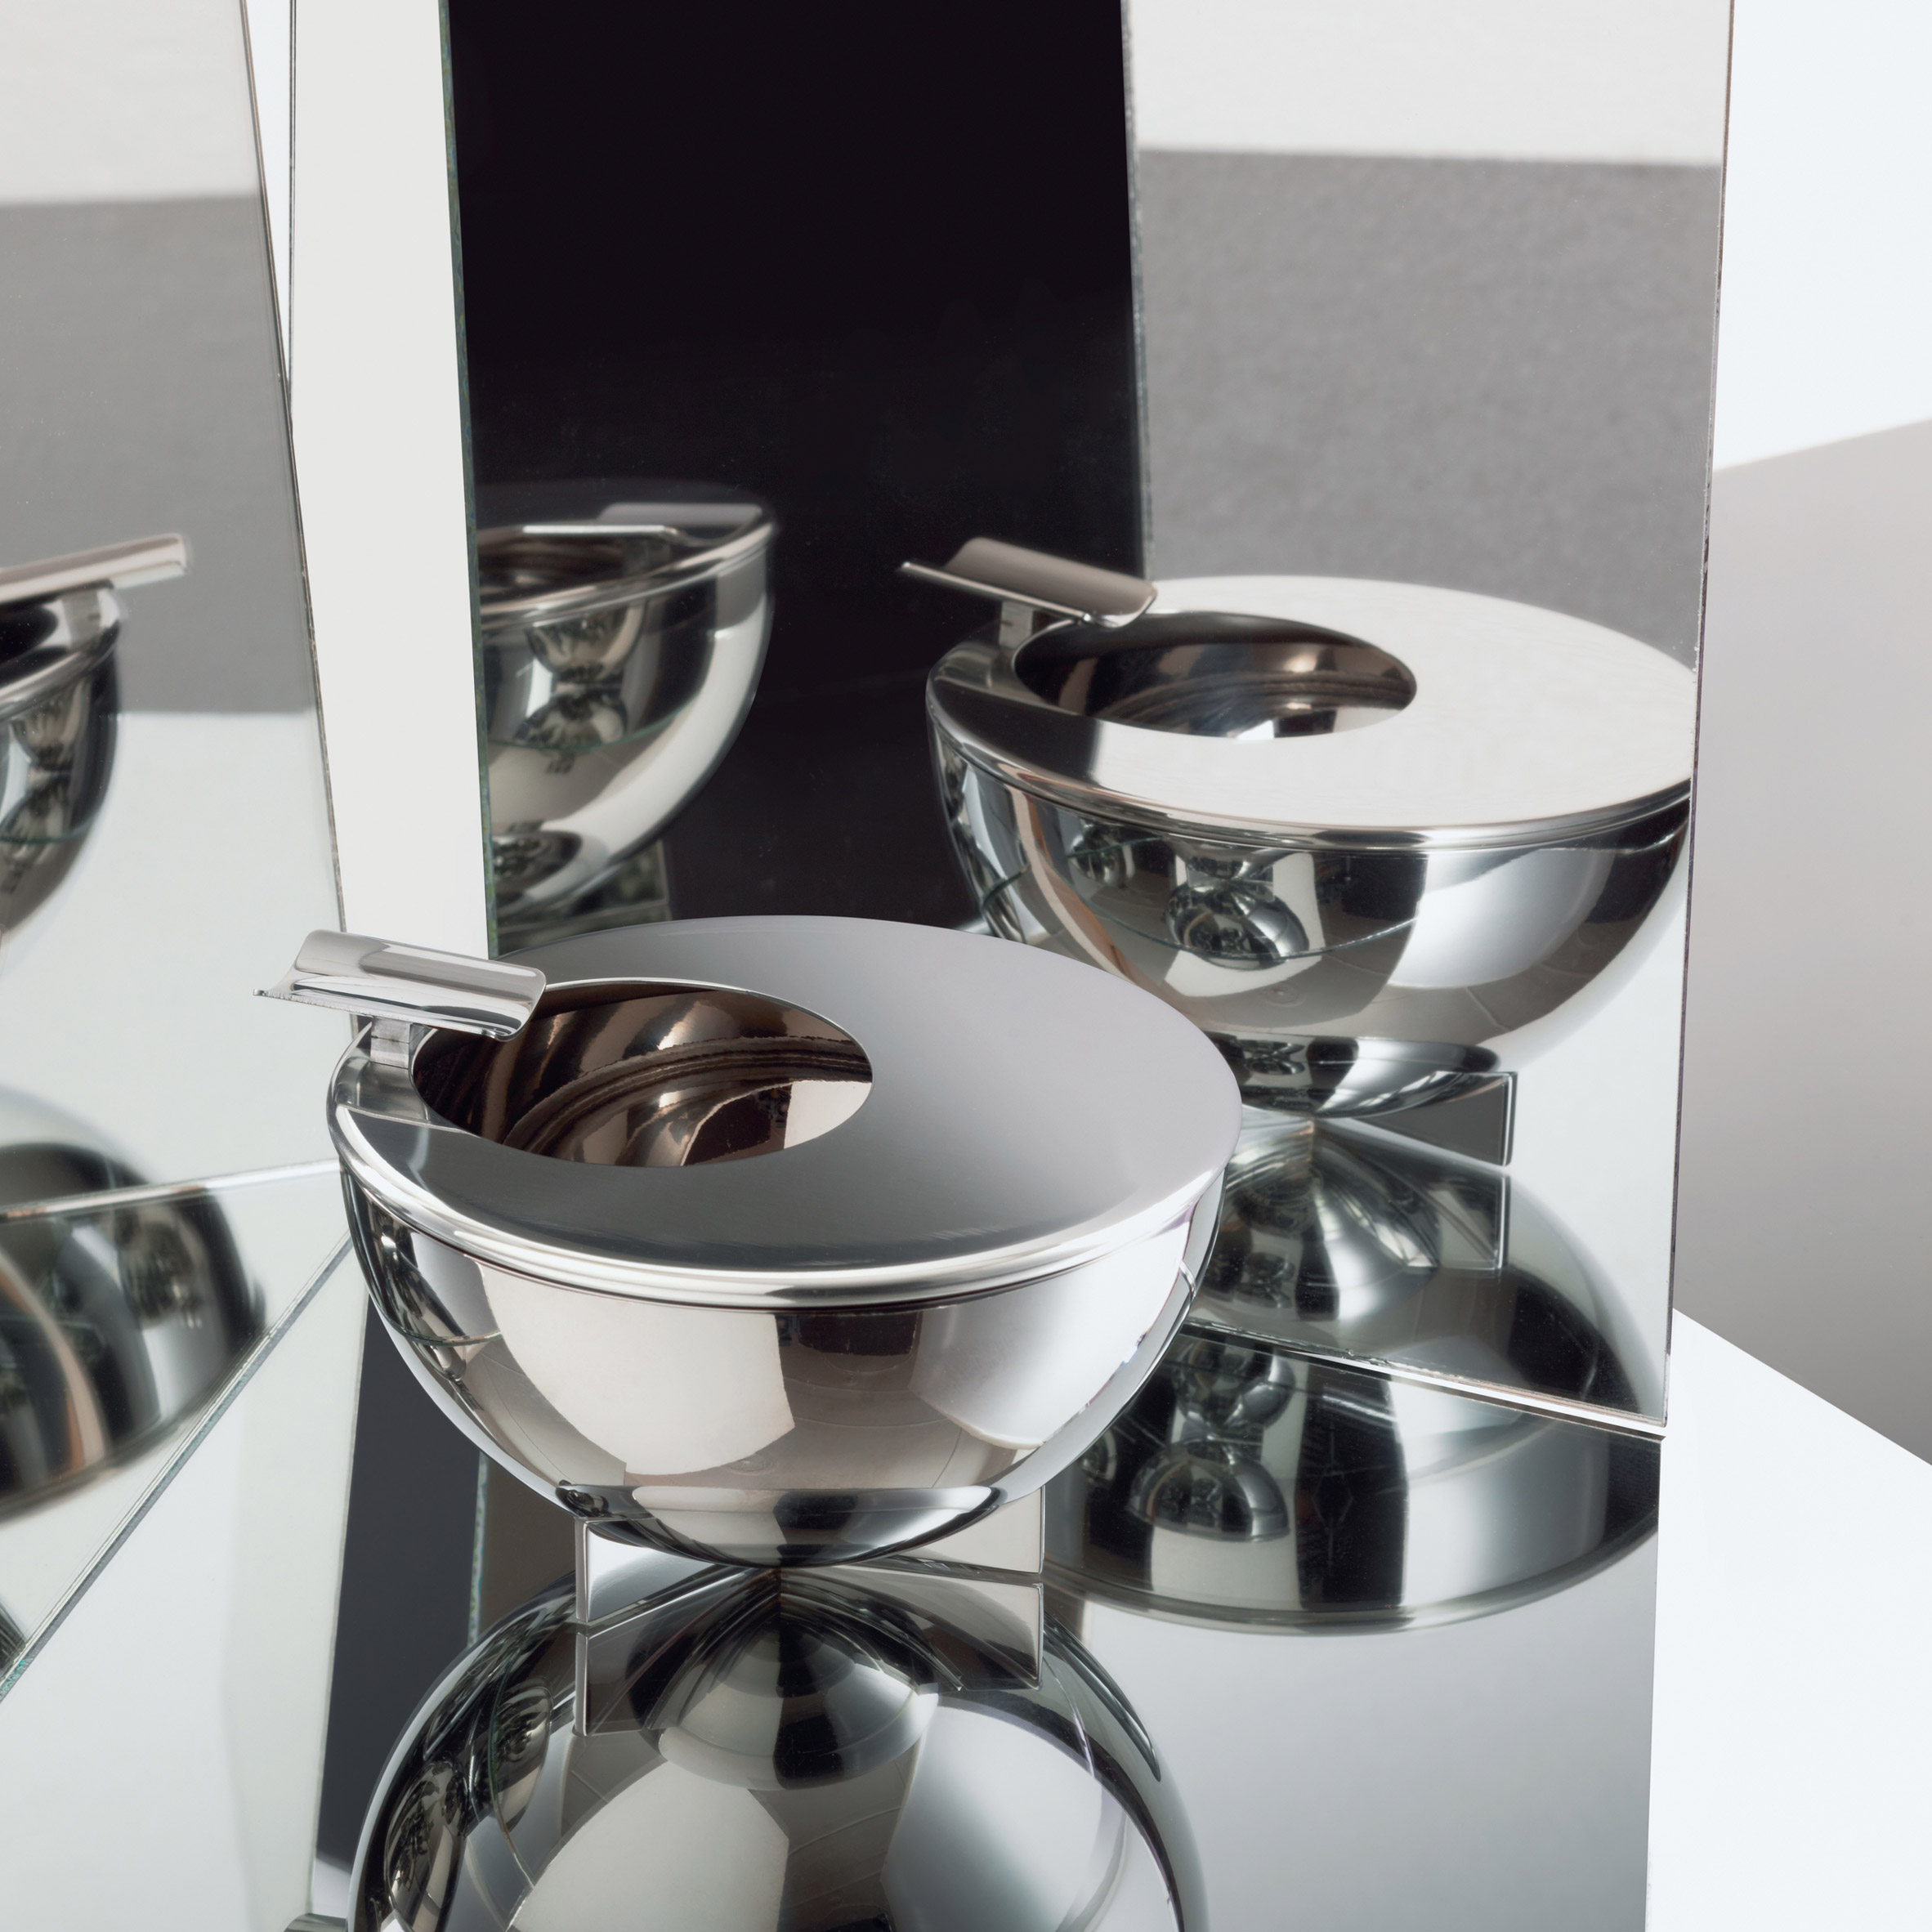 10 Bauhaus gifts: Marianna Brandt ashtray by Alessi